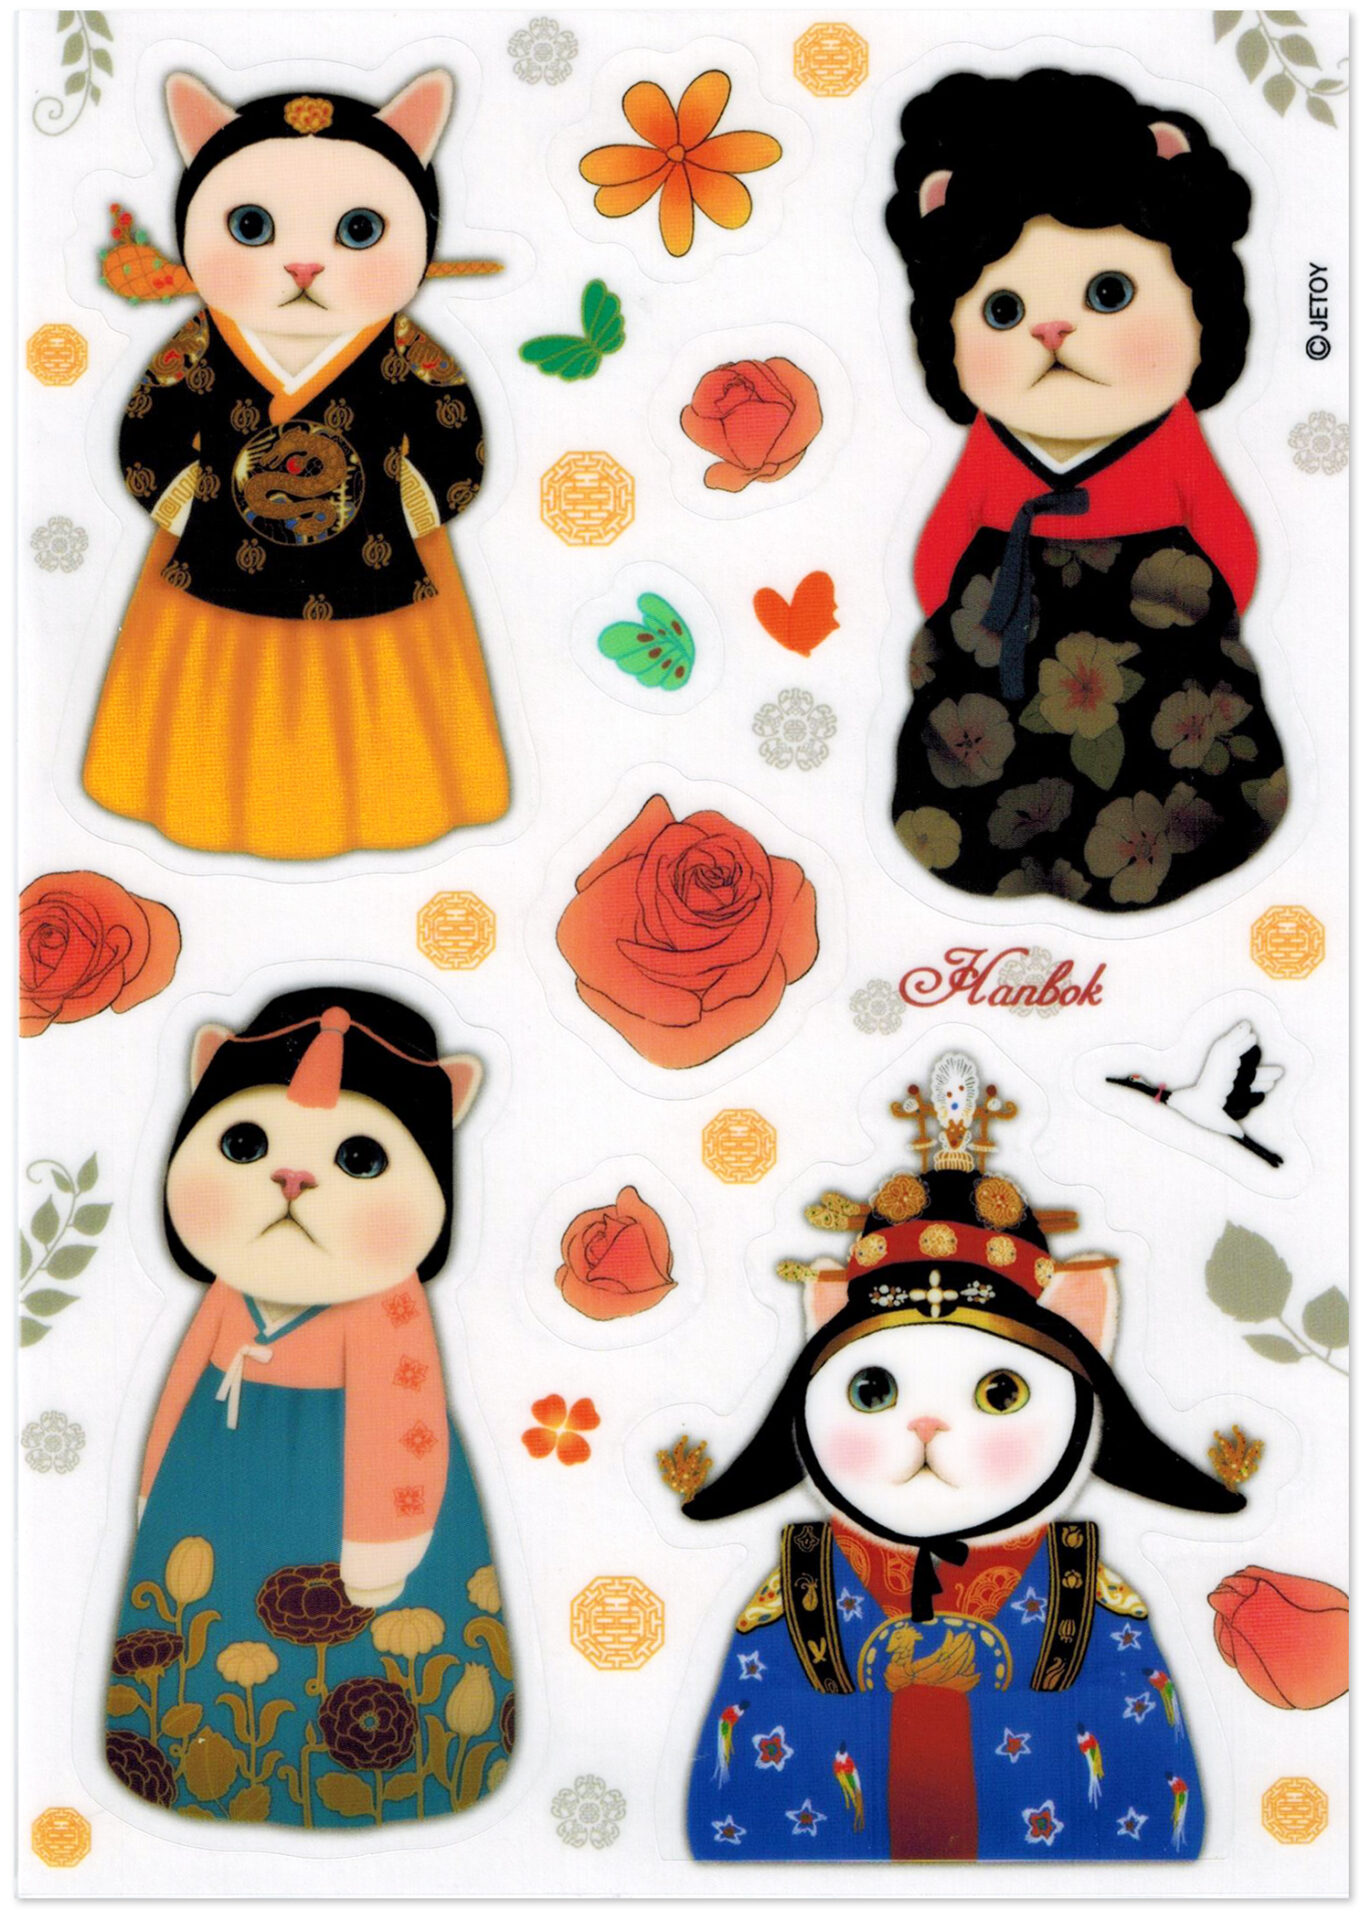 Jetoy Choo Choo Vinyl Die-Cut Sticker Sheet: Hanbok